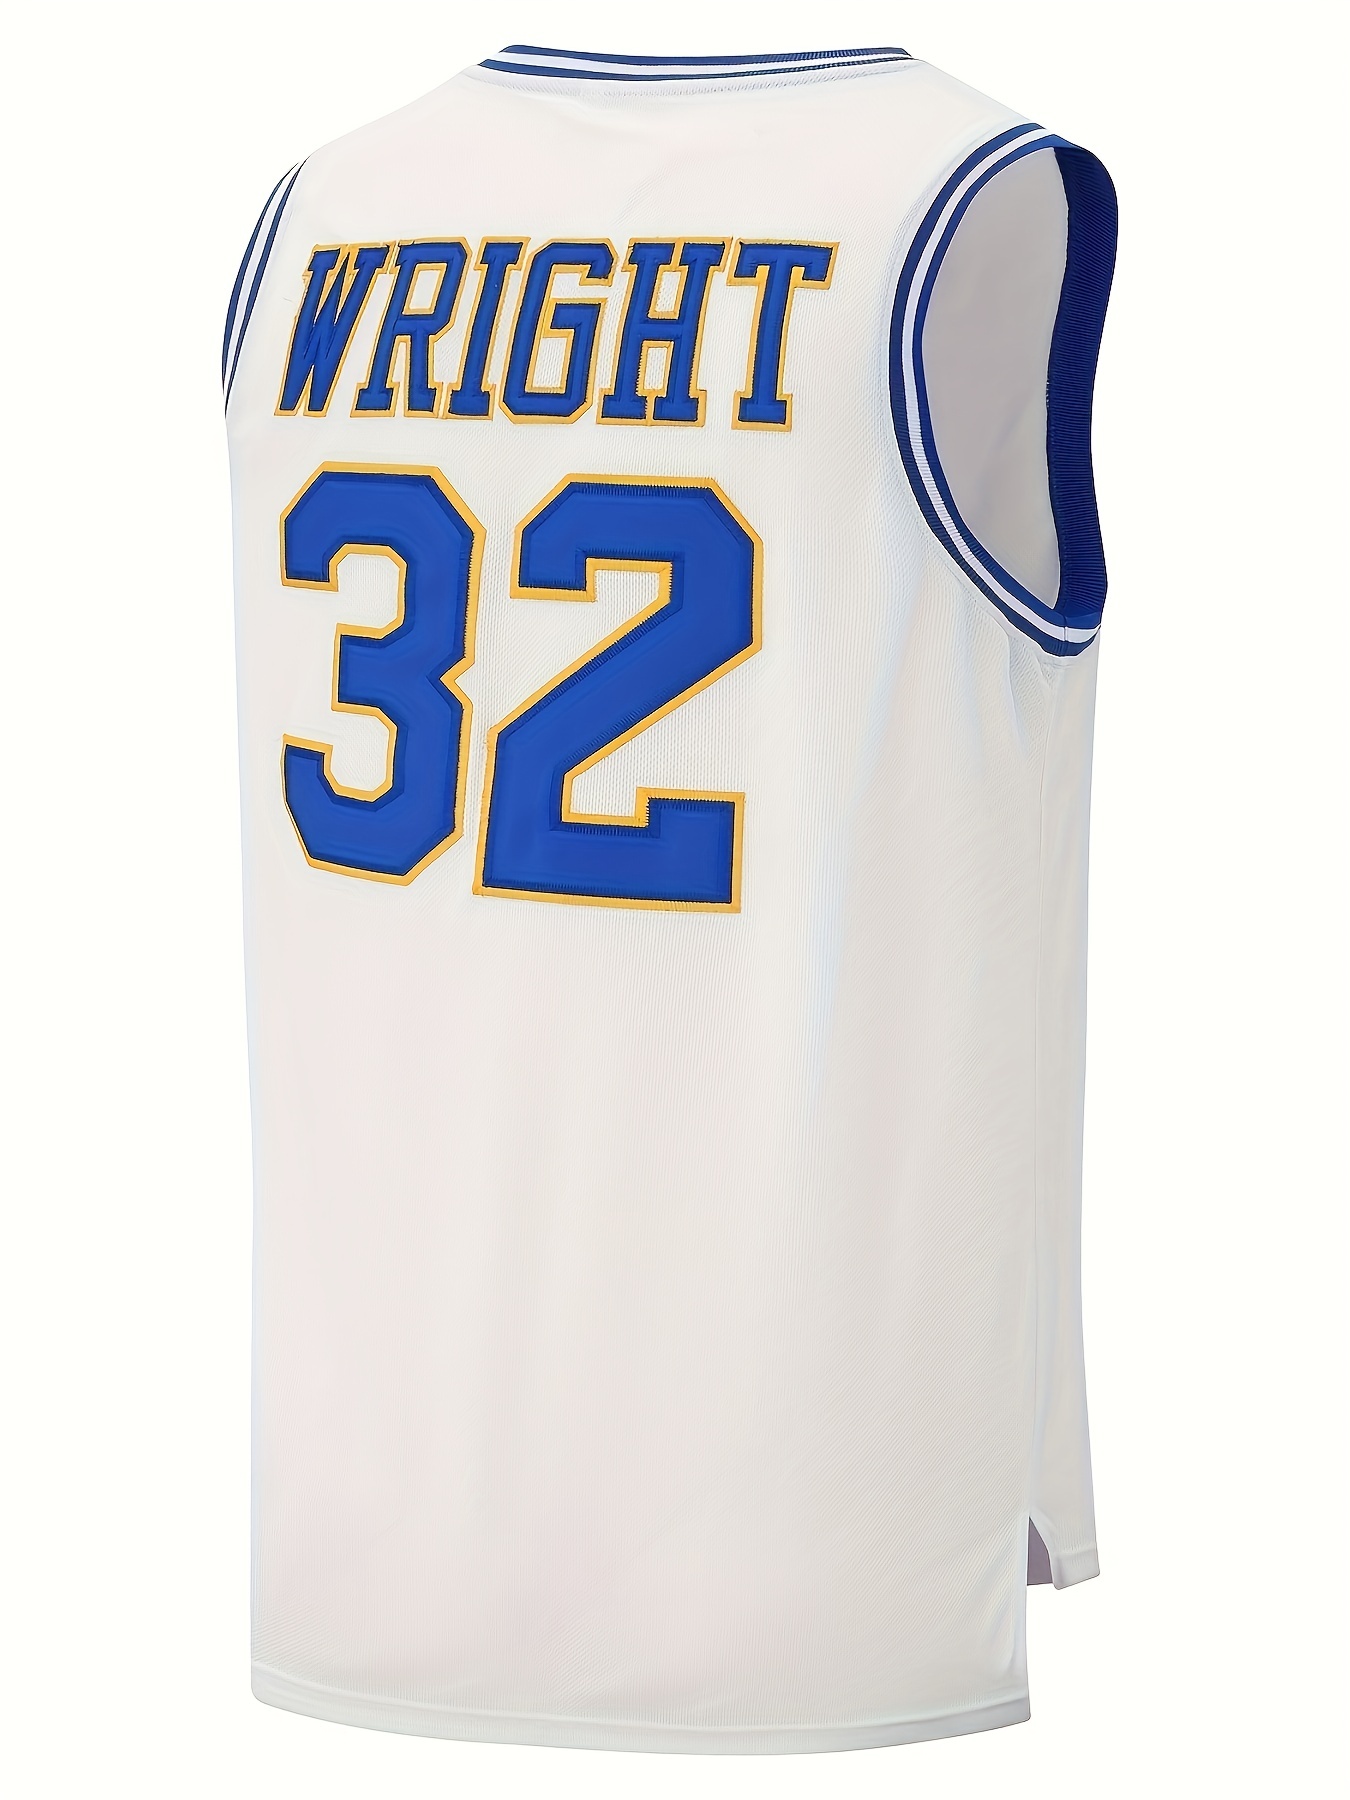 Monica Wright 32 Crenshaw High School Basketball Jersey with Love